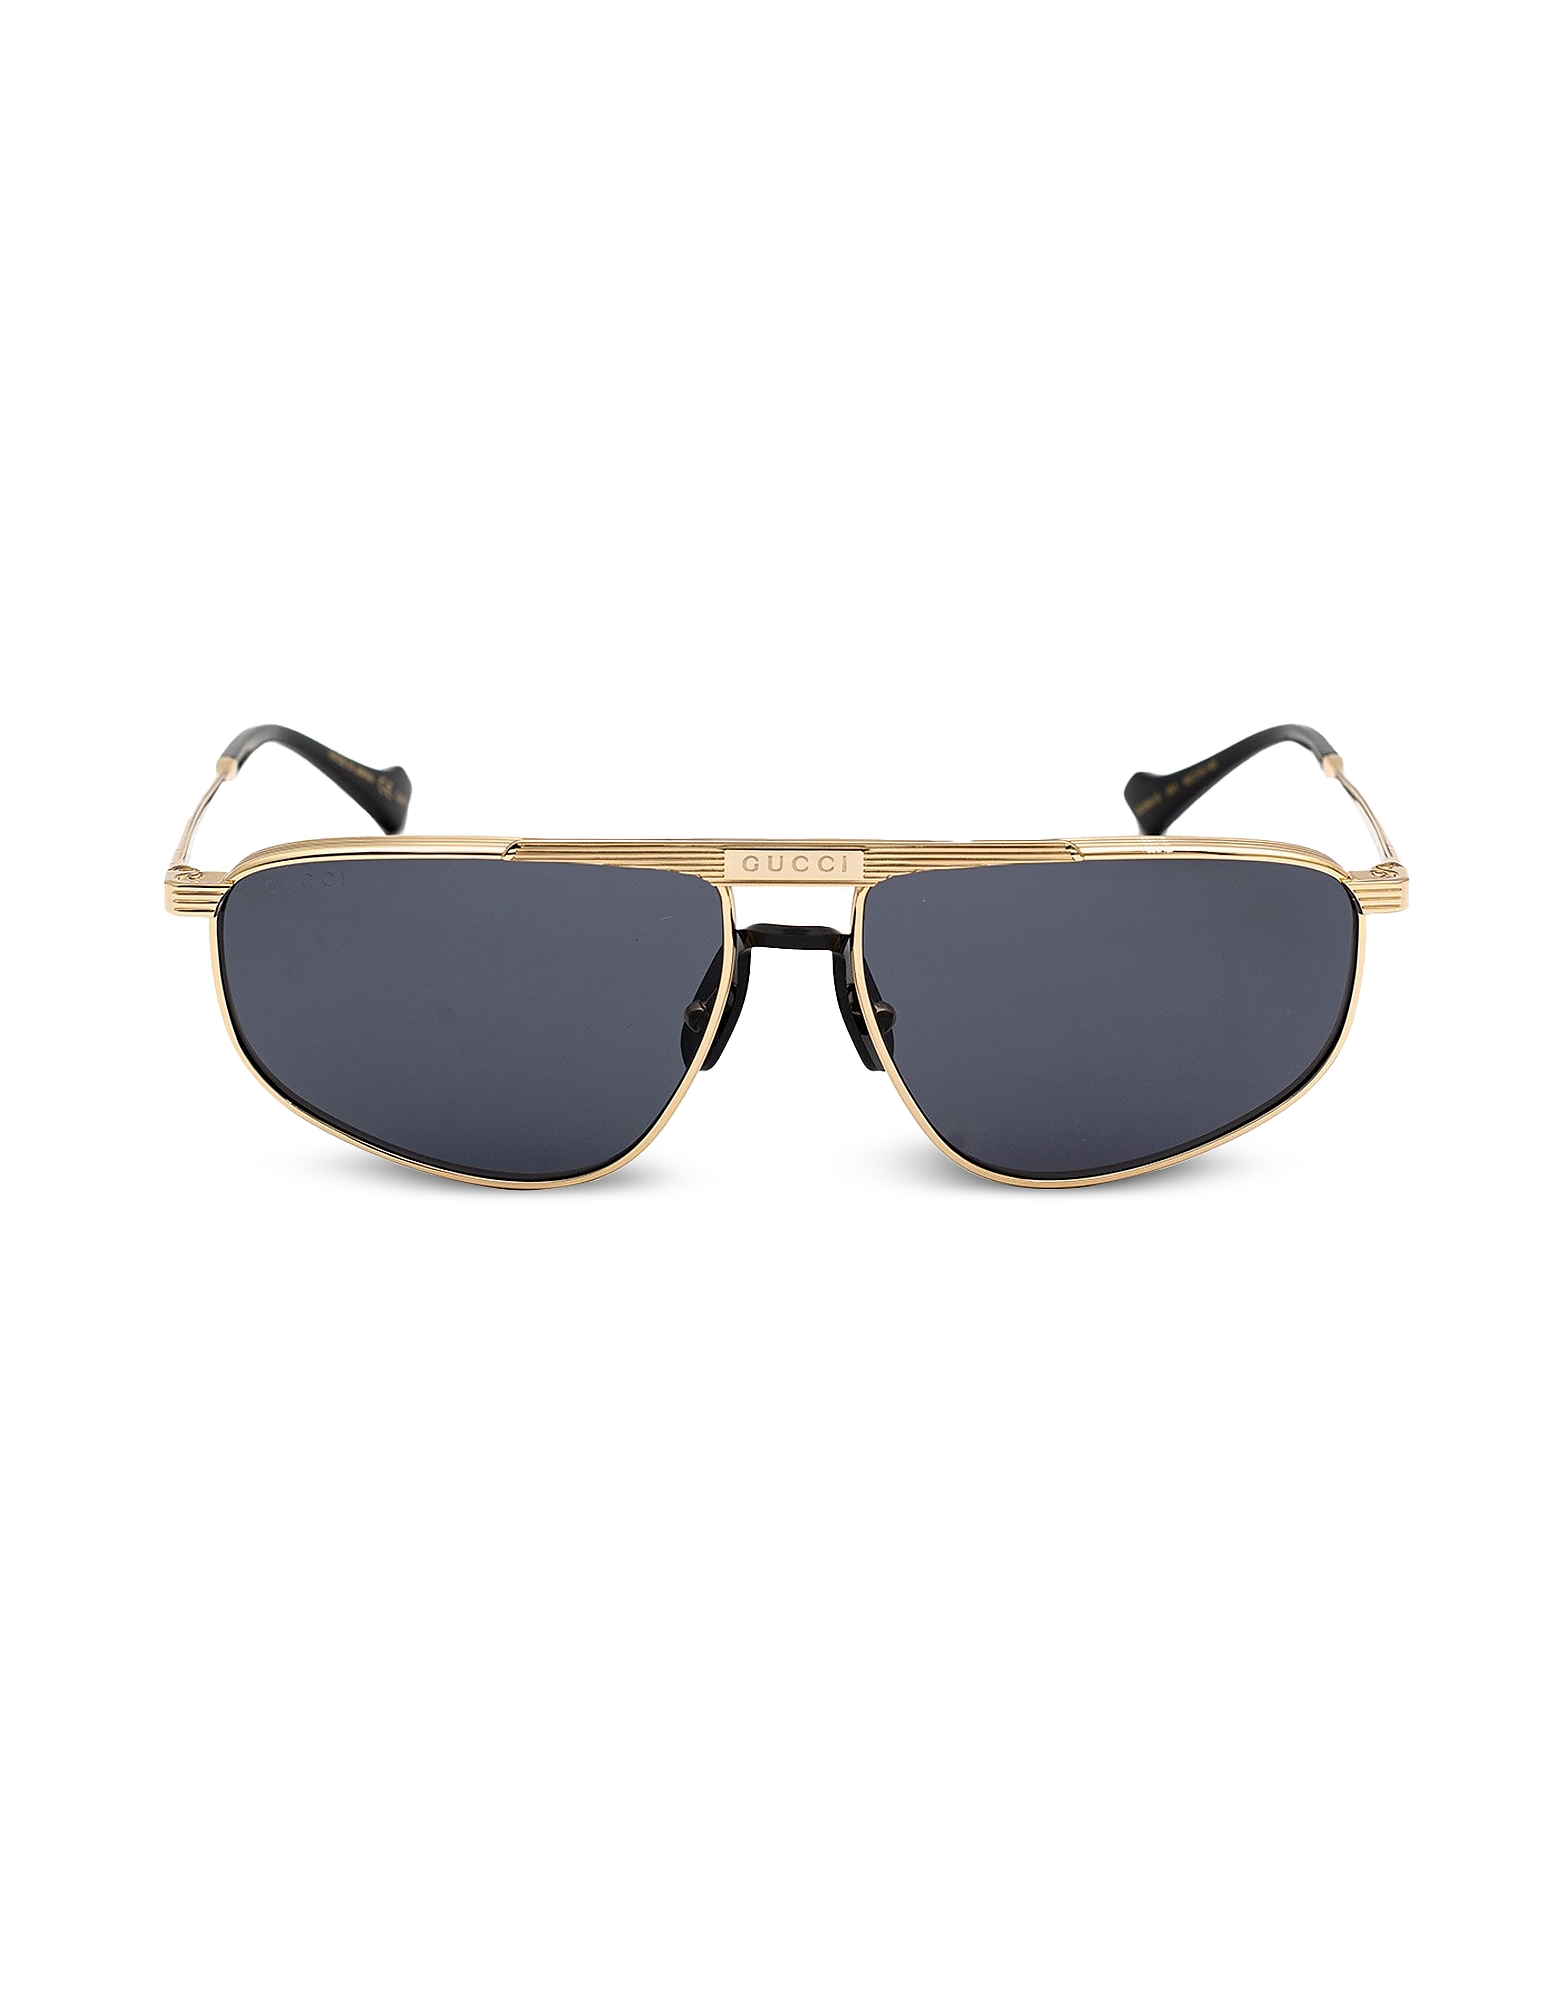 Gucci Sunglasses Gold Metal Frame Men's Sunglasses